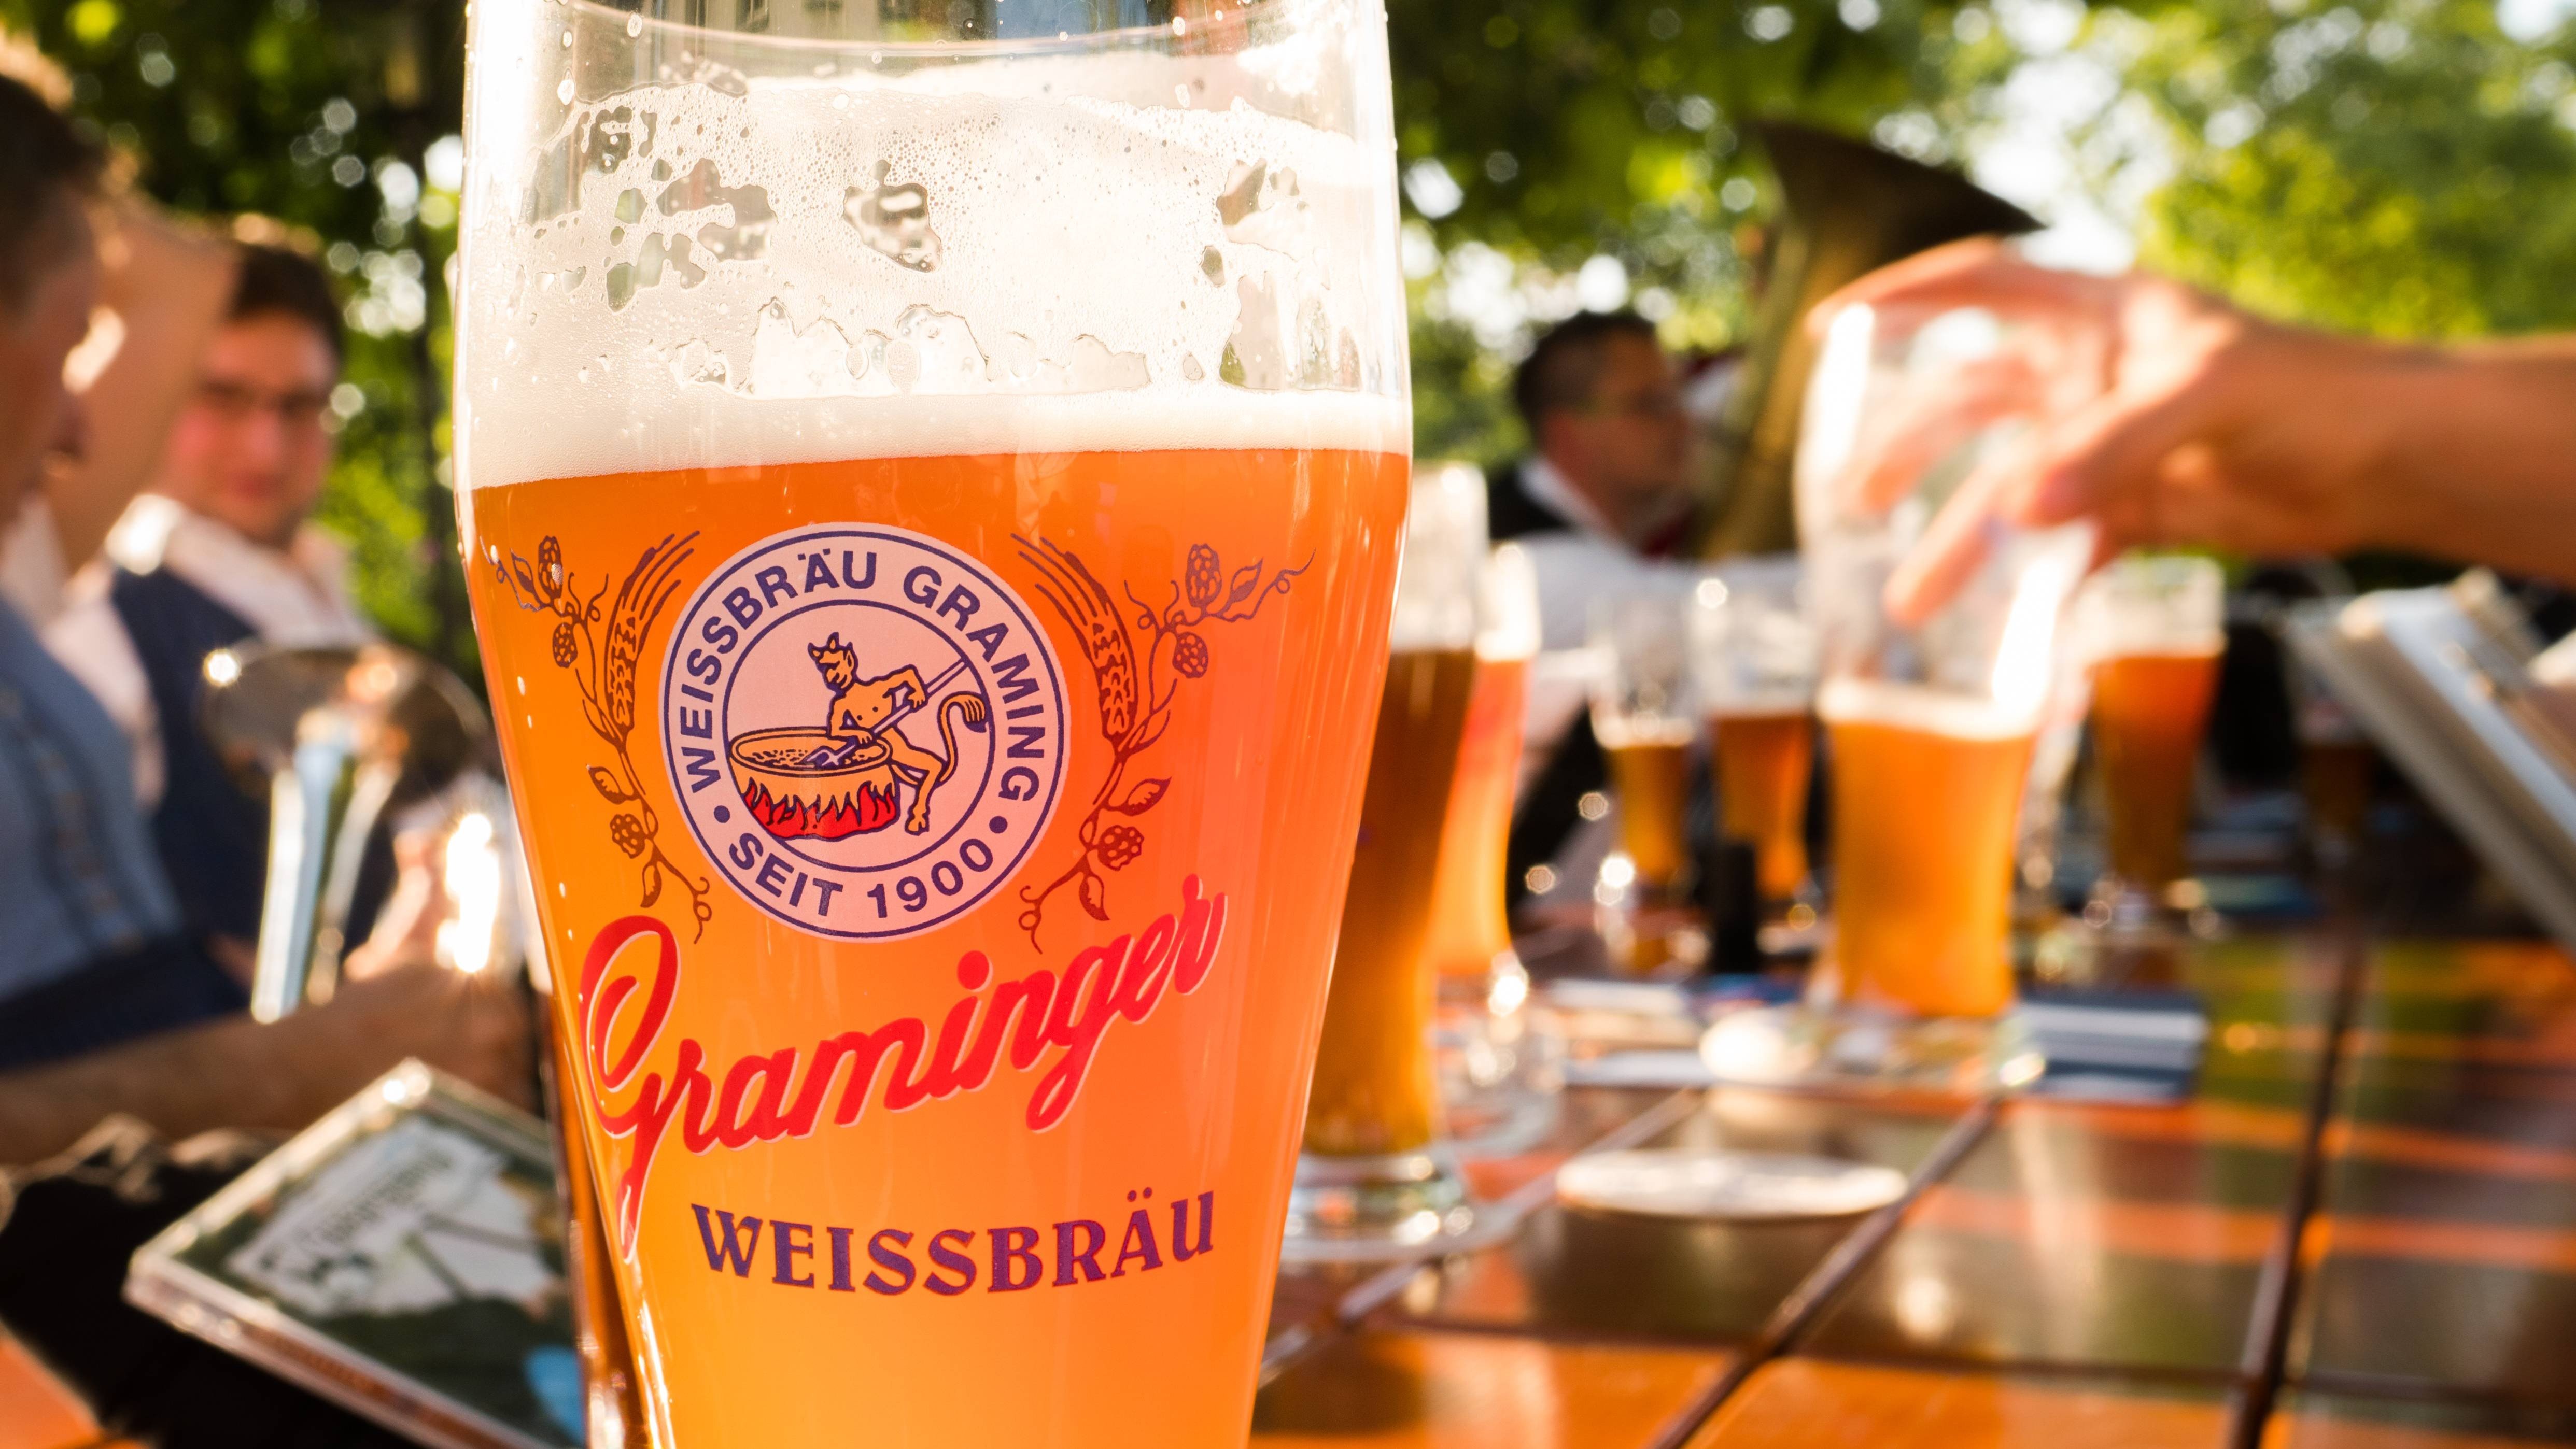 Graminger Weißbräu brewery from Germany